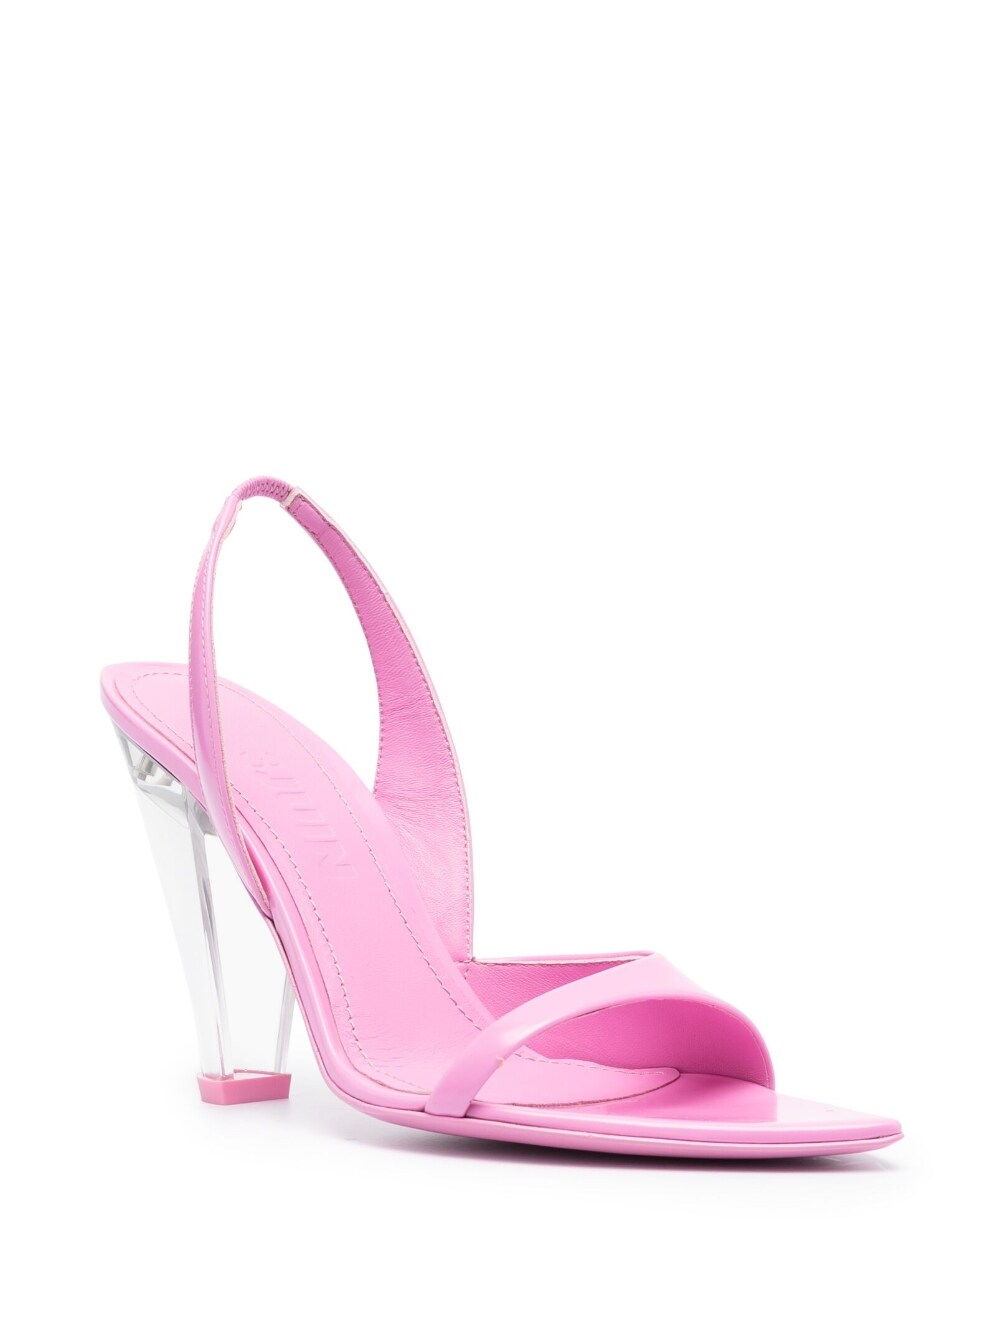 3 Juin Sandals Pink